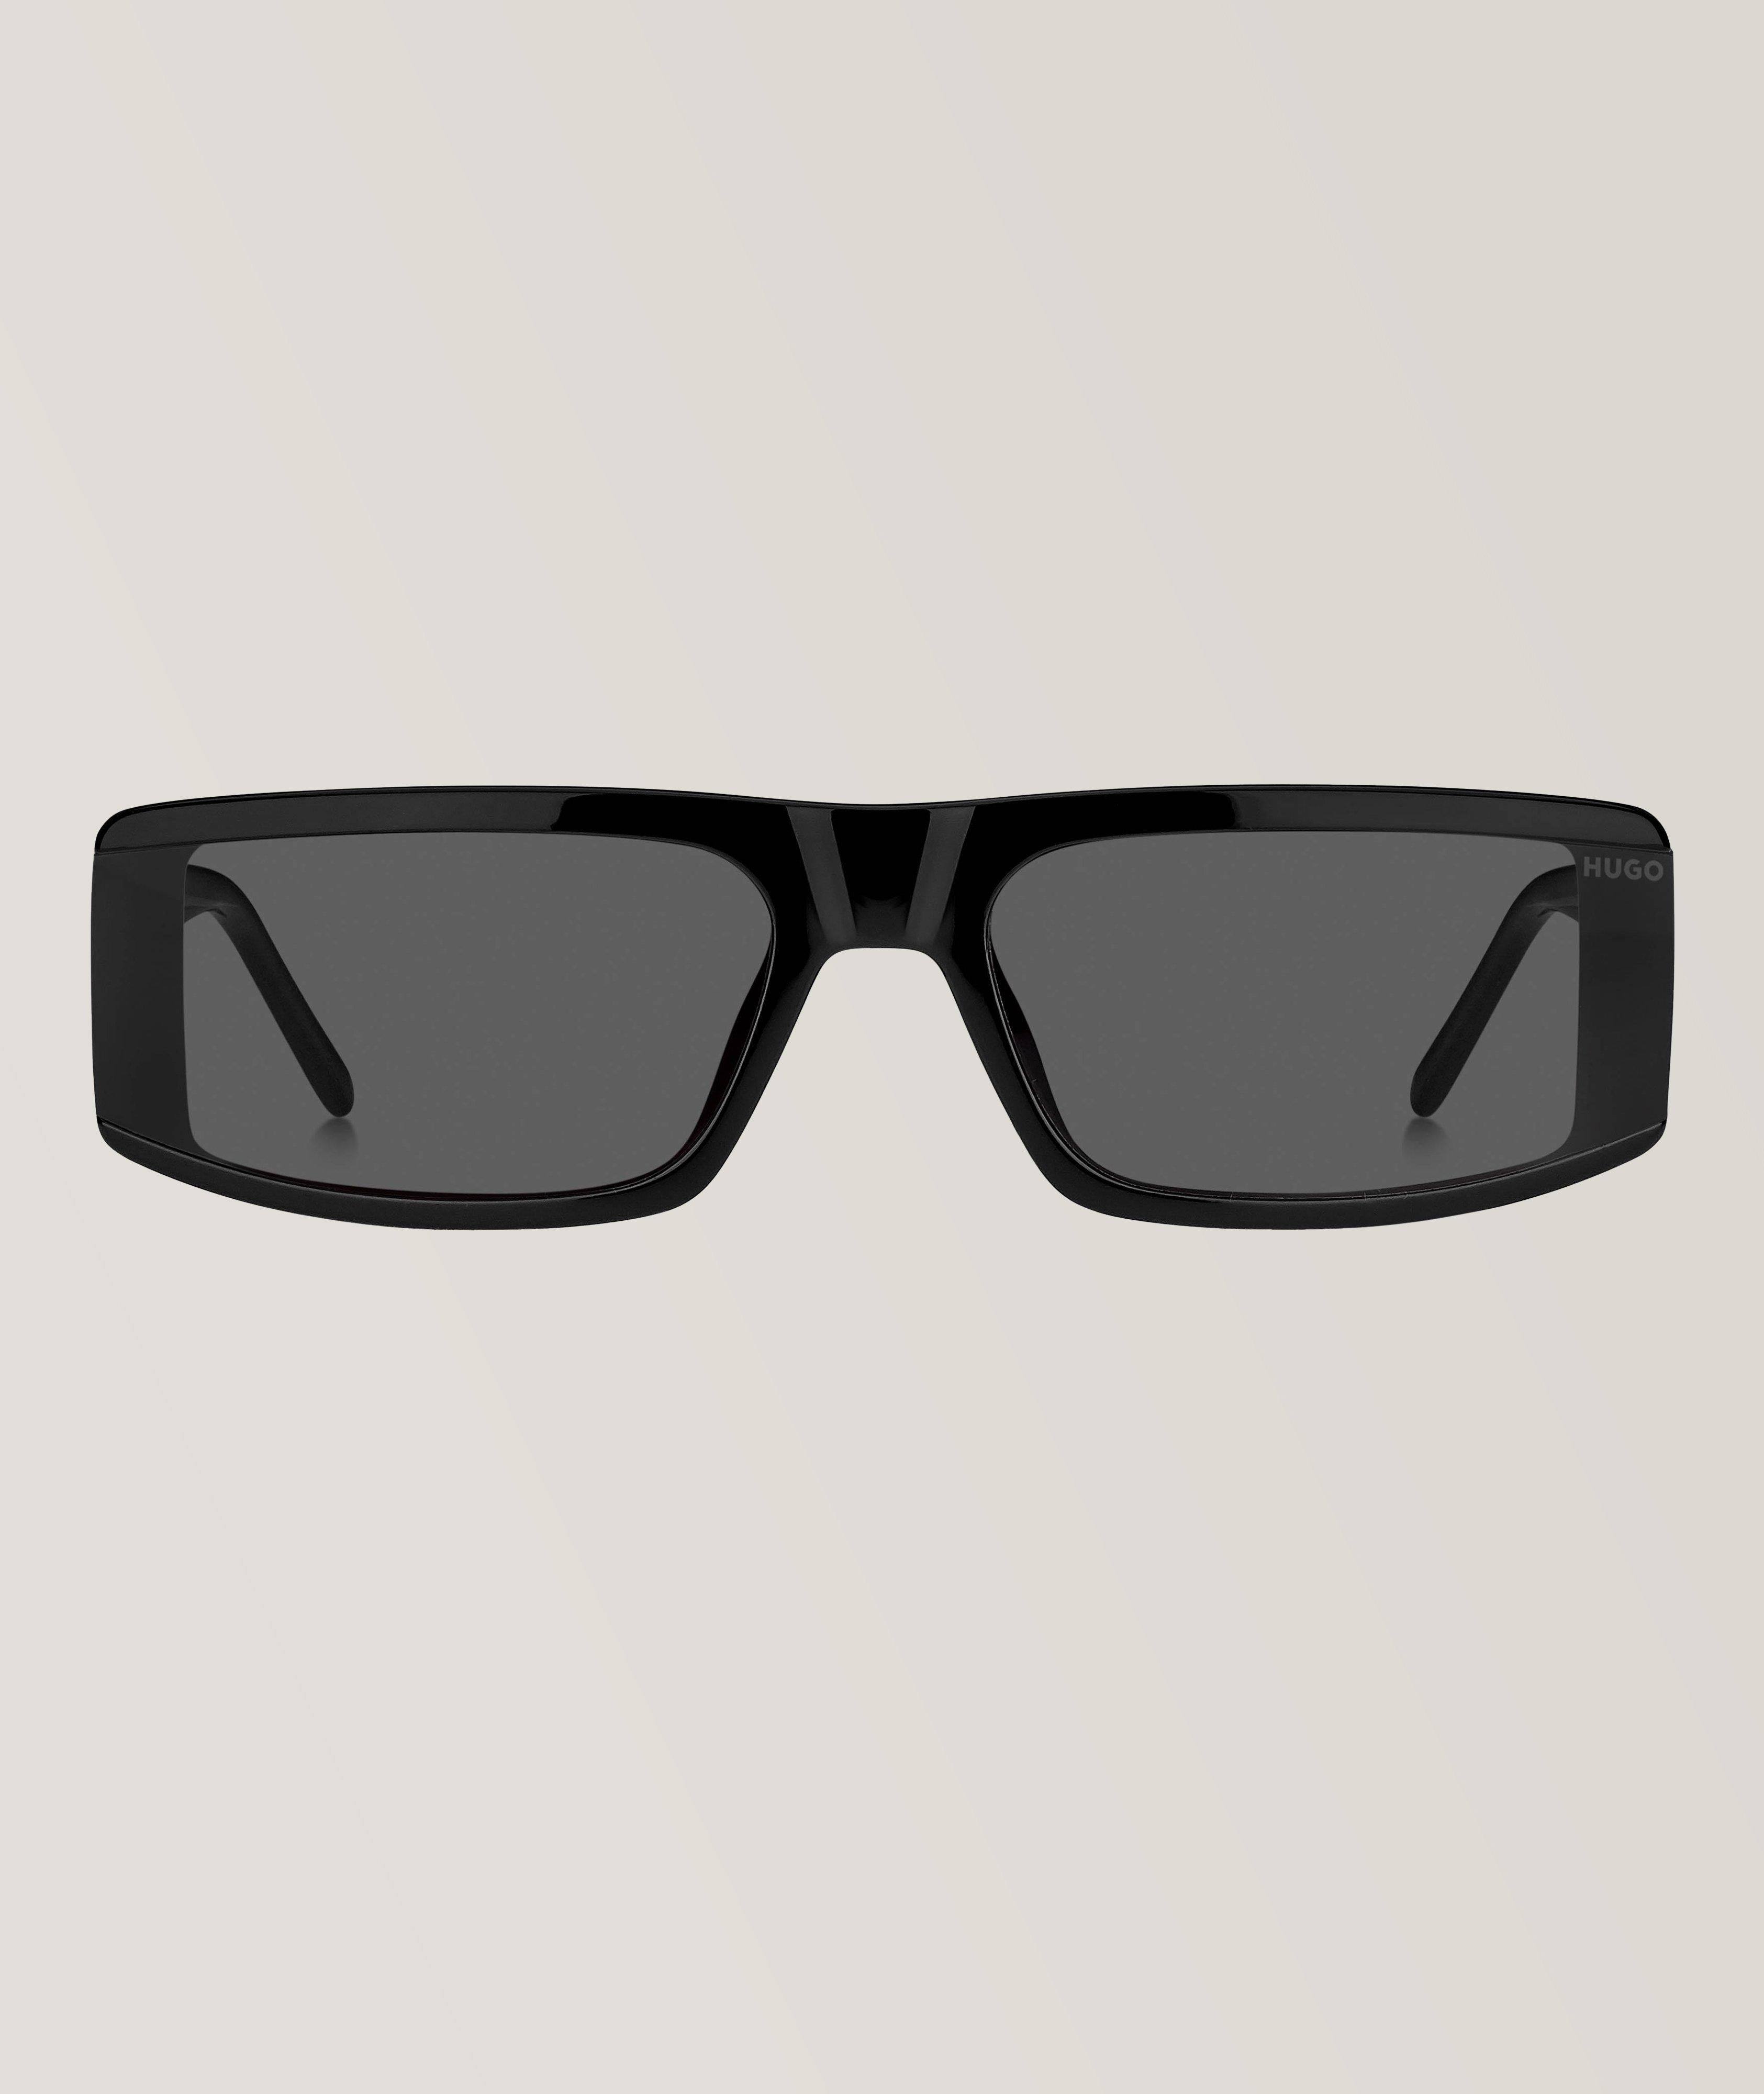 Hugo Black Sunglasses With Grey Lenses  image 0